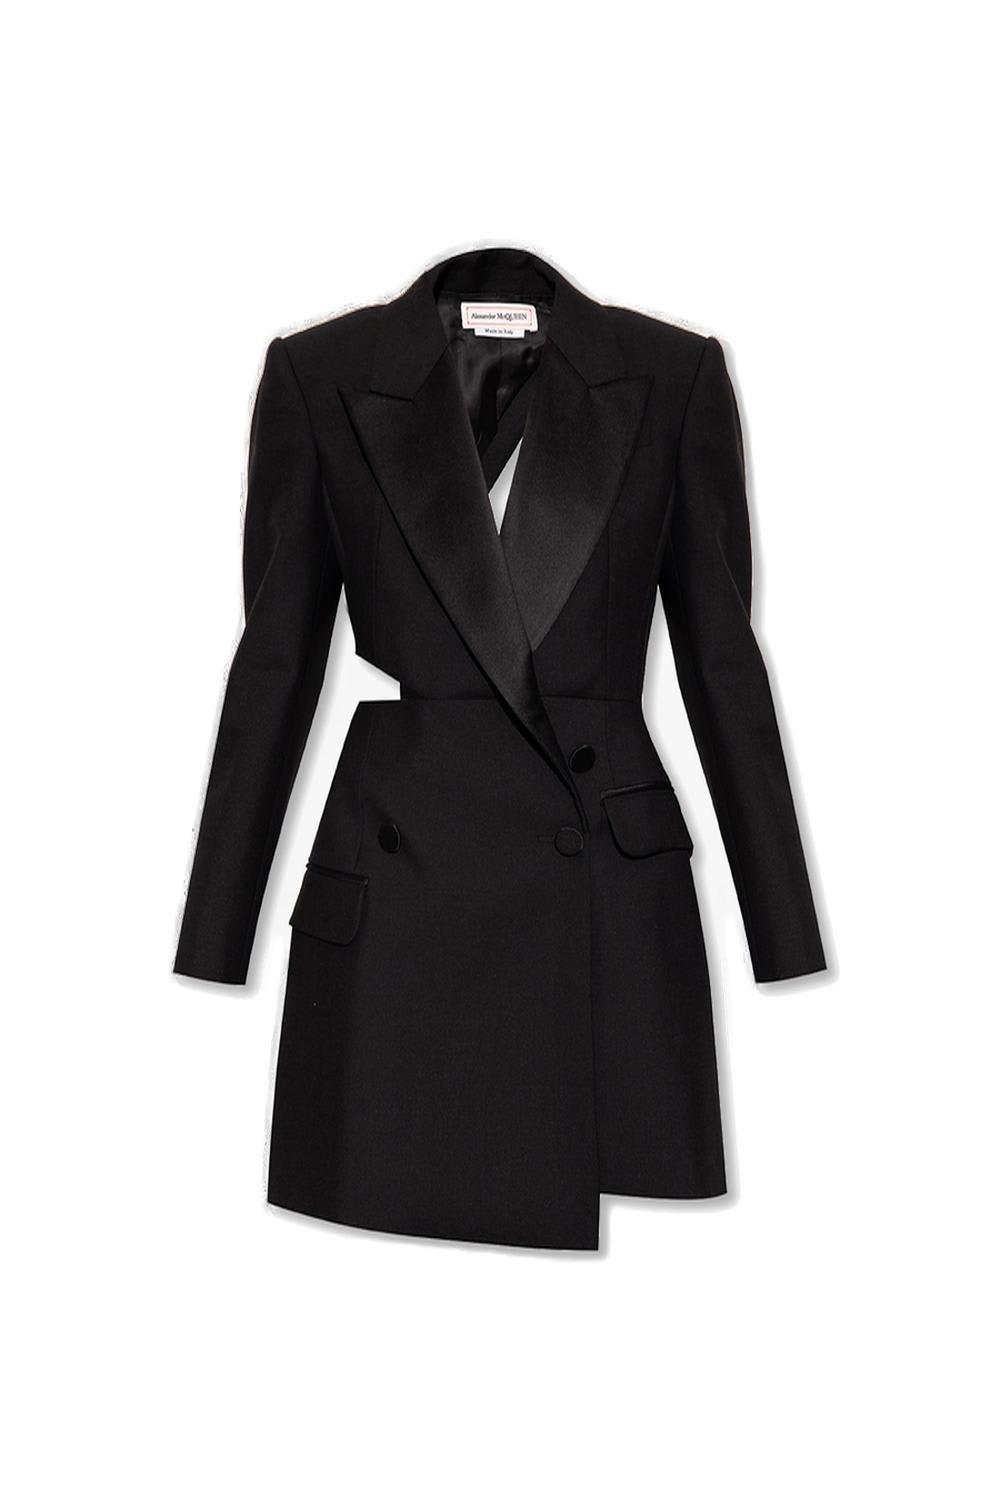 Alexander McQueen Blazer-style Dress in Black | Lyst